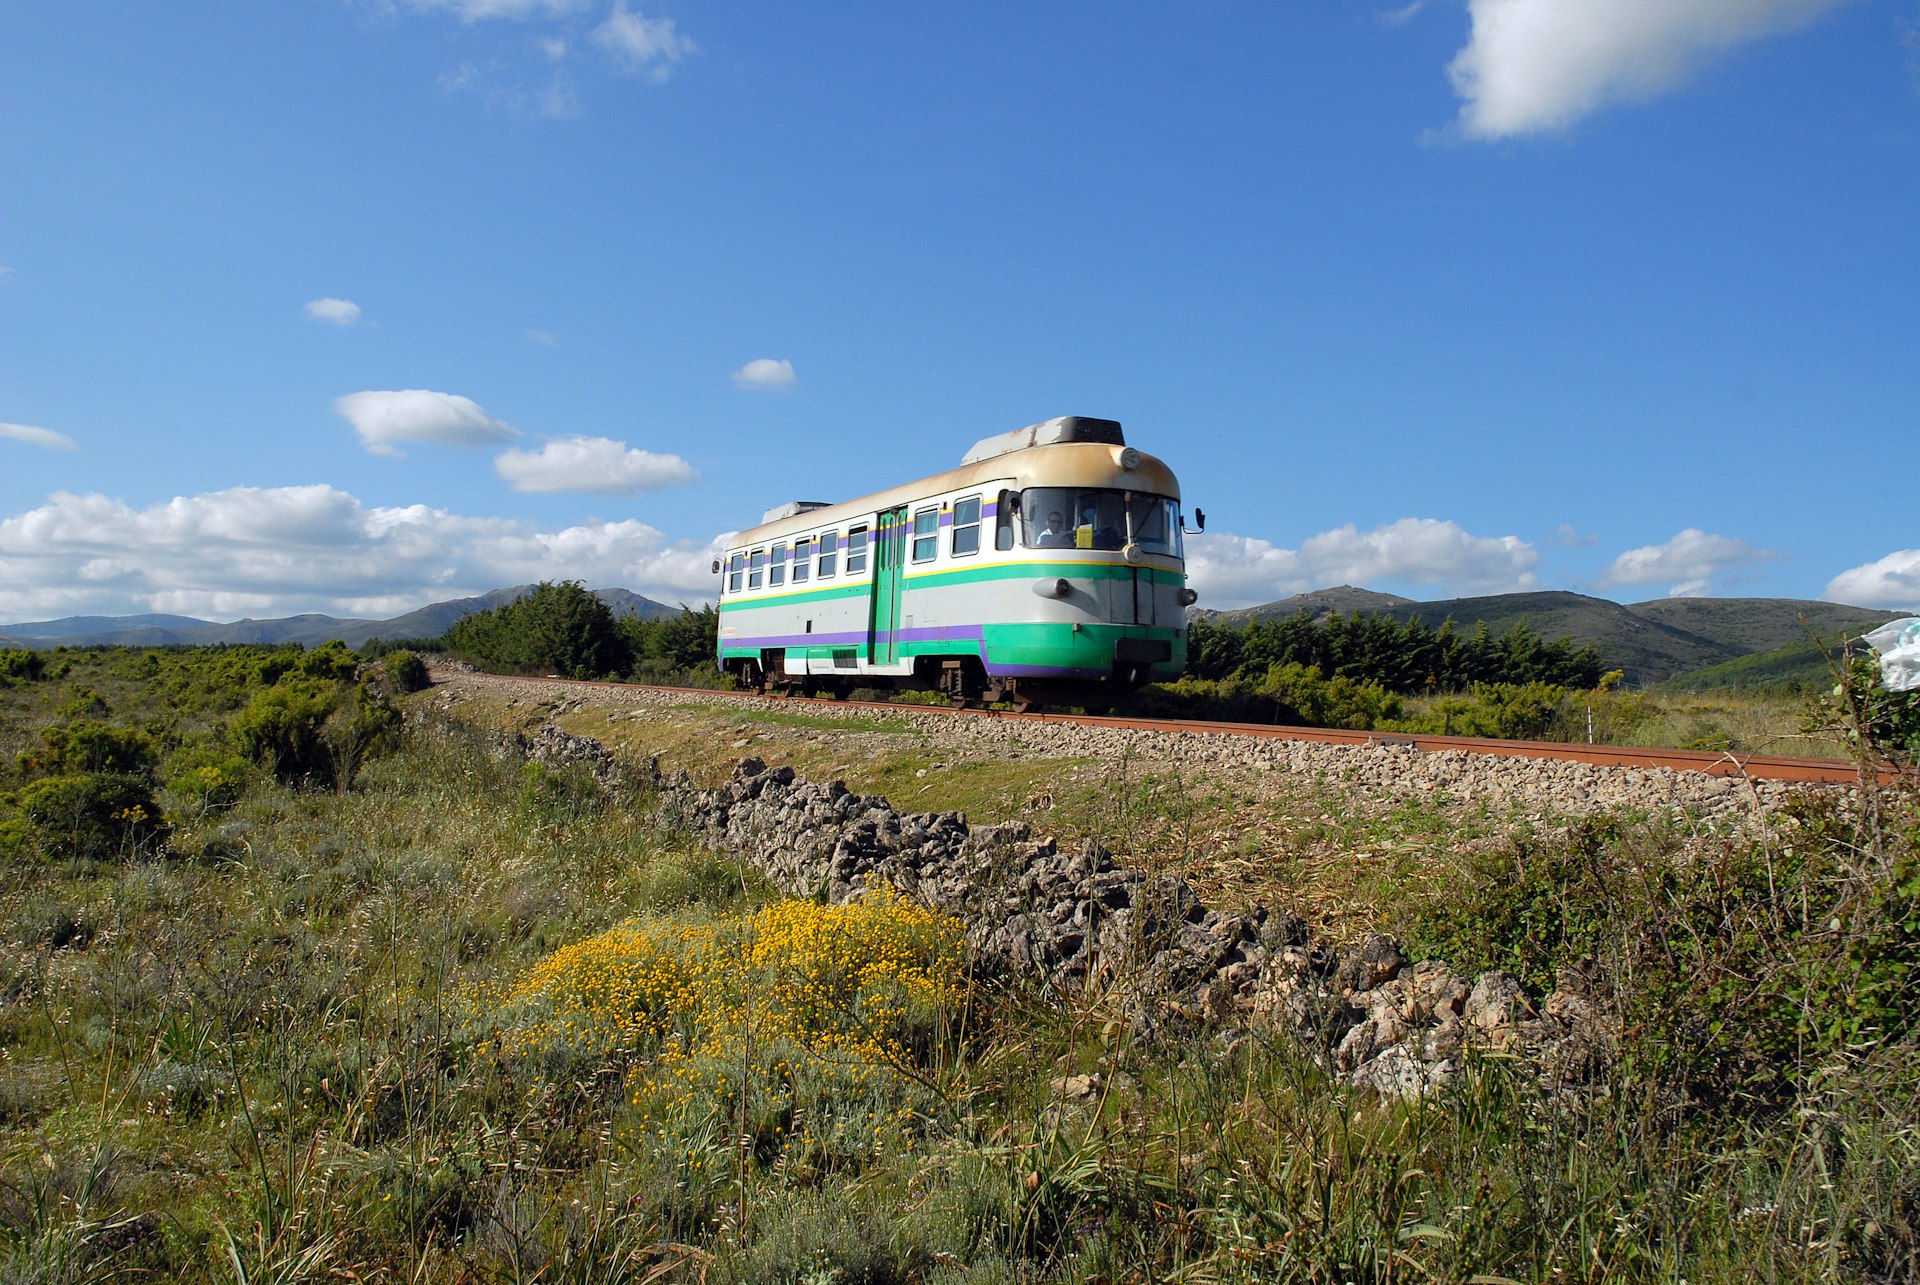 Green Train of Sardinia in the countryside